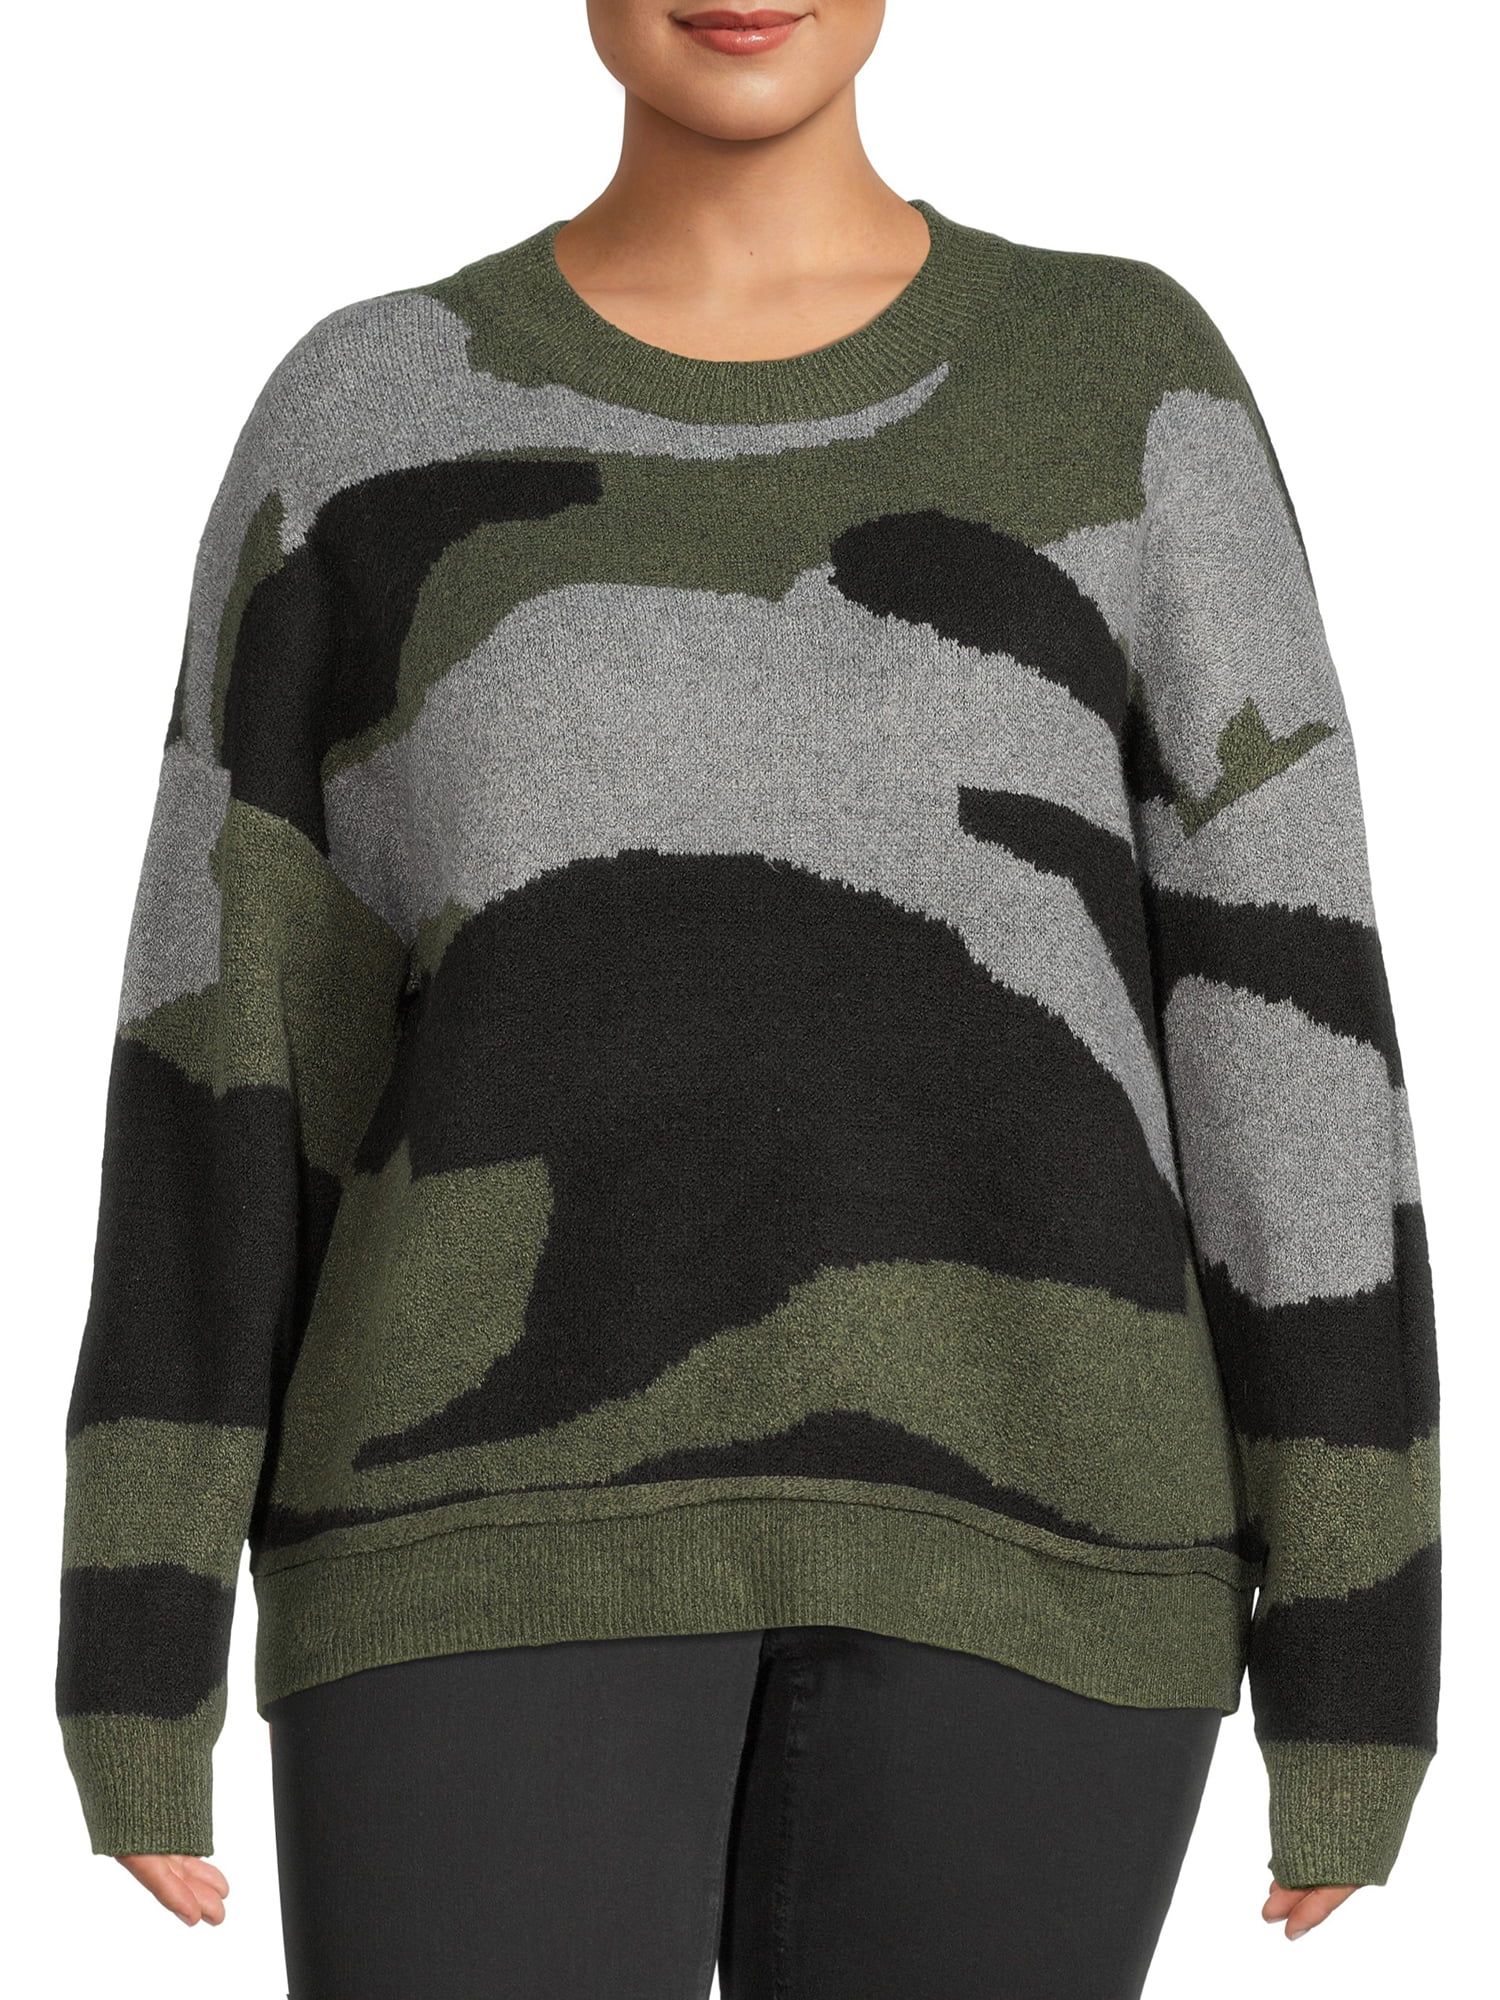 Terra & Sky Long Sleeve Pullover Mock Neck Drop Shoulder Sweater, Sea Turtle | Walmart (US)